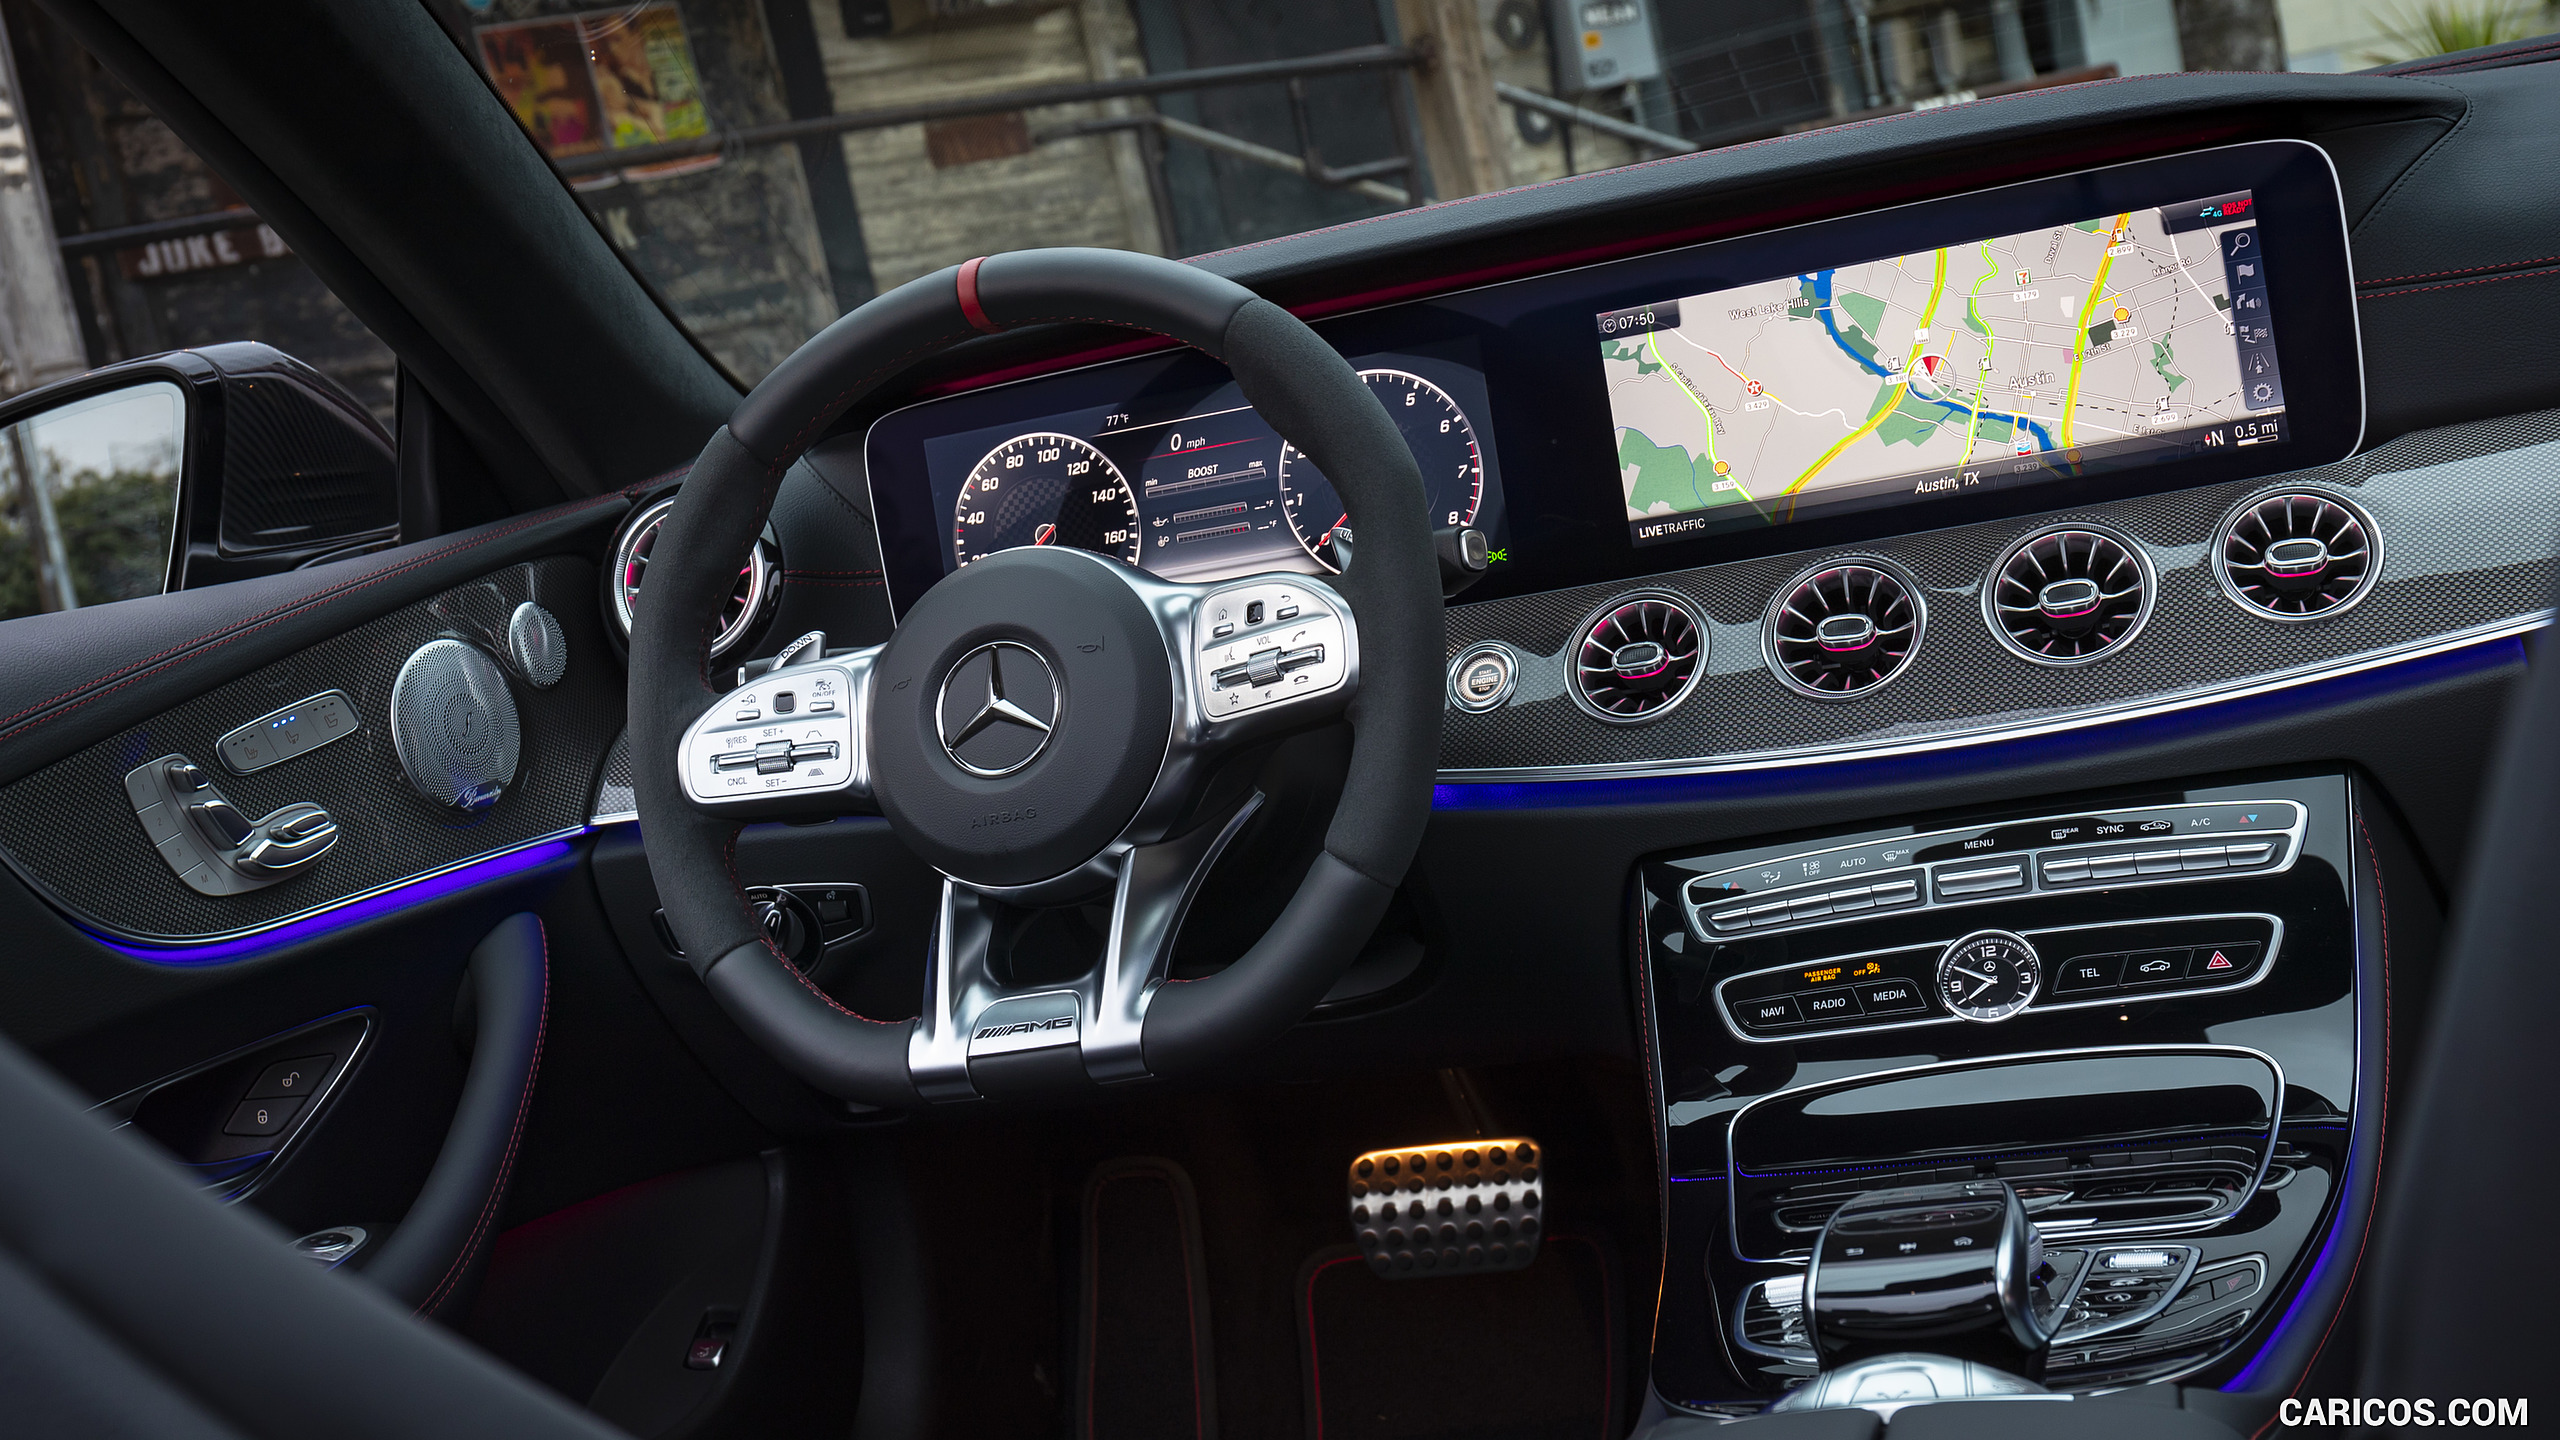 2019 Mercedes-AMG E 53 4MATIC+ Cabrio (US-Spec) Wallpaper - Interior, Cockpit, #192 of 193